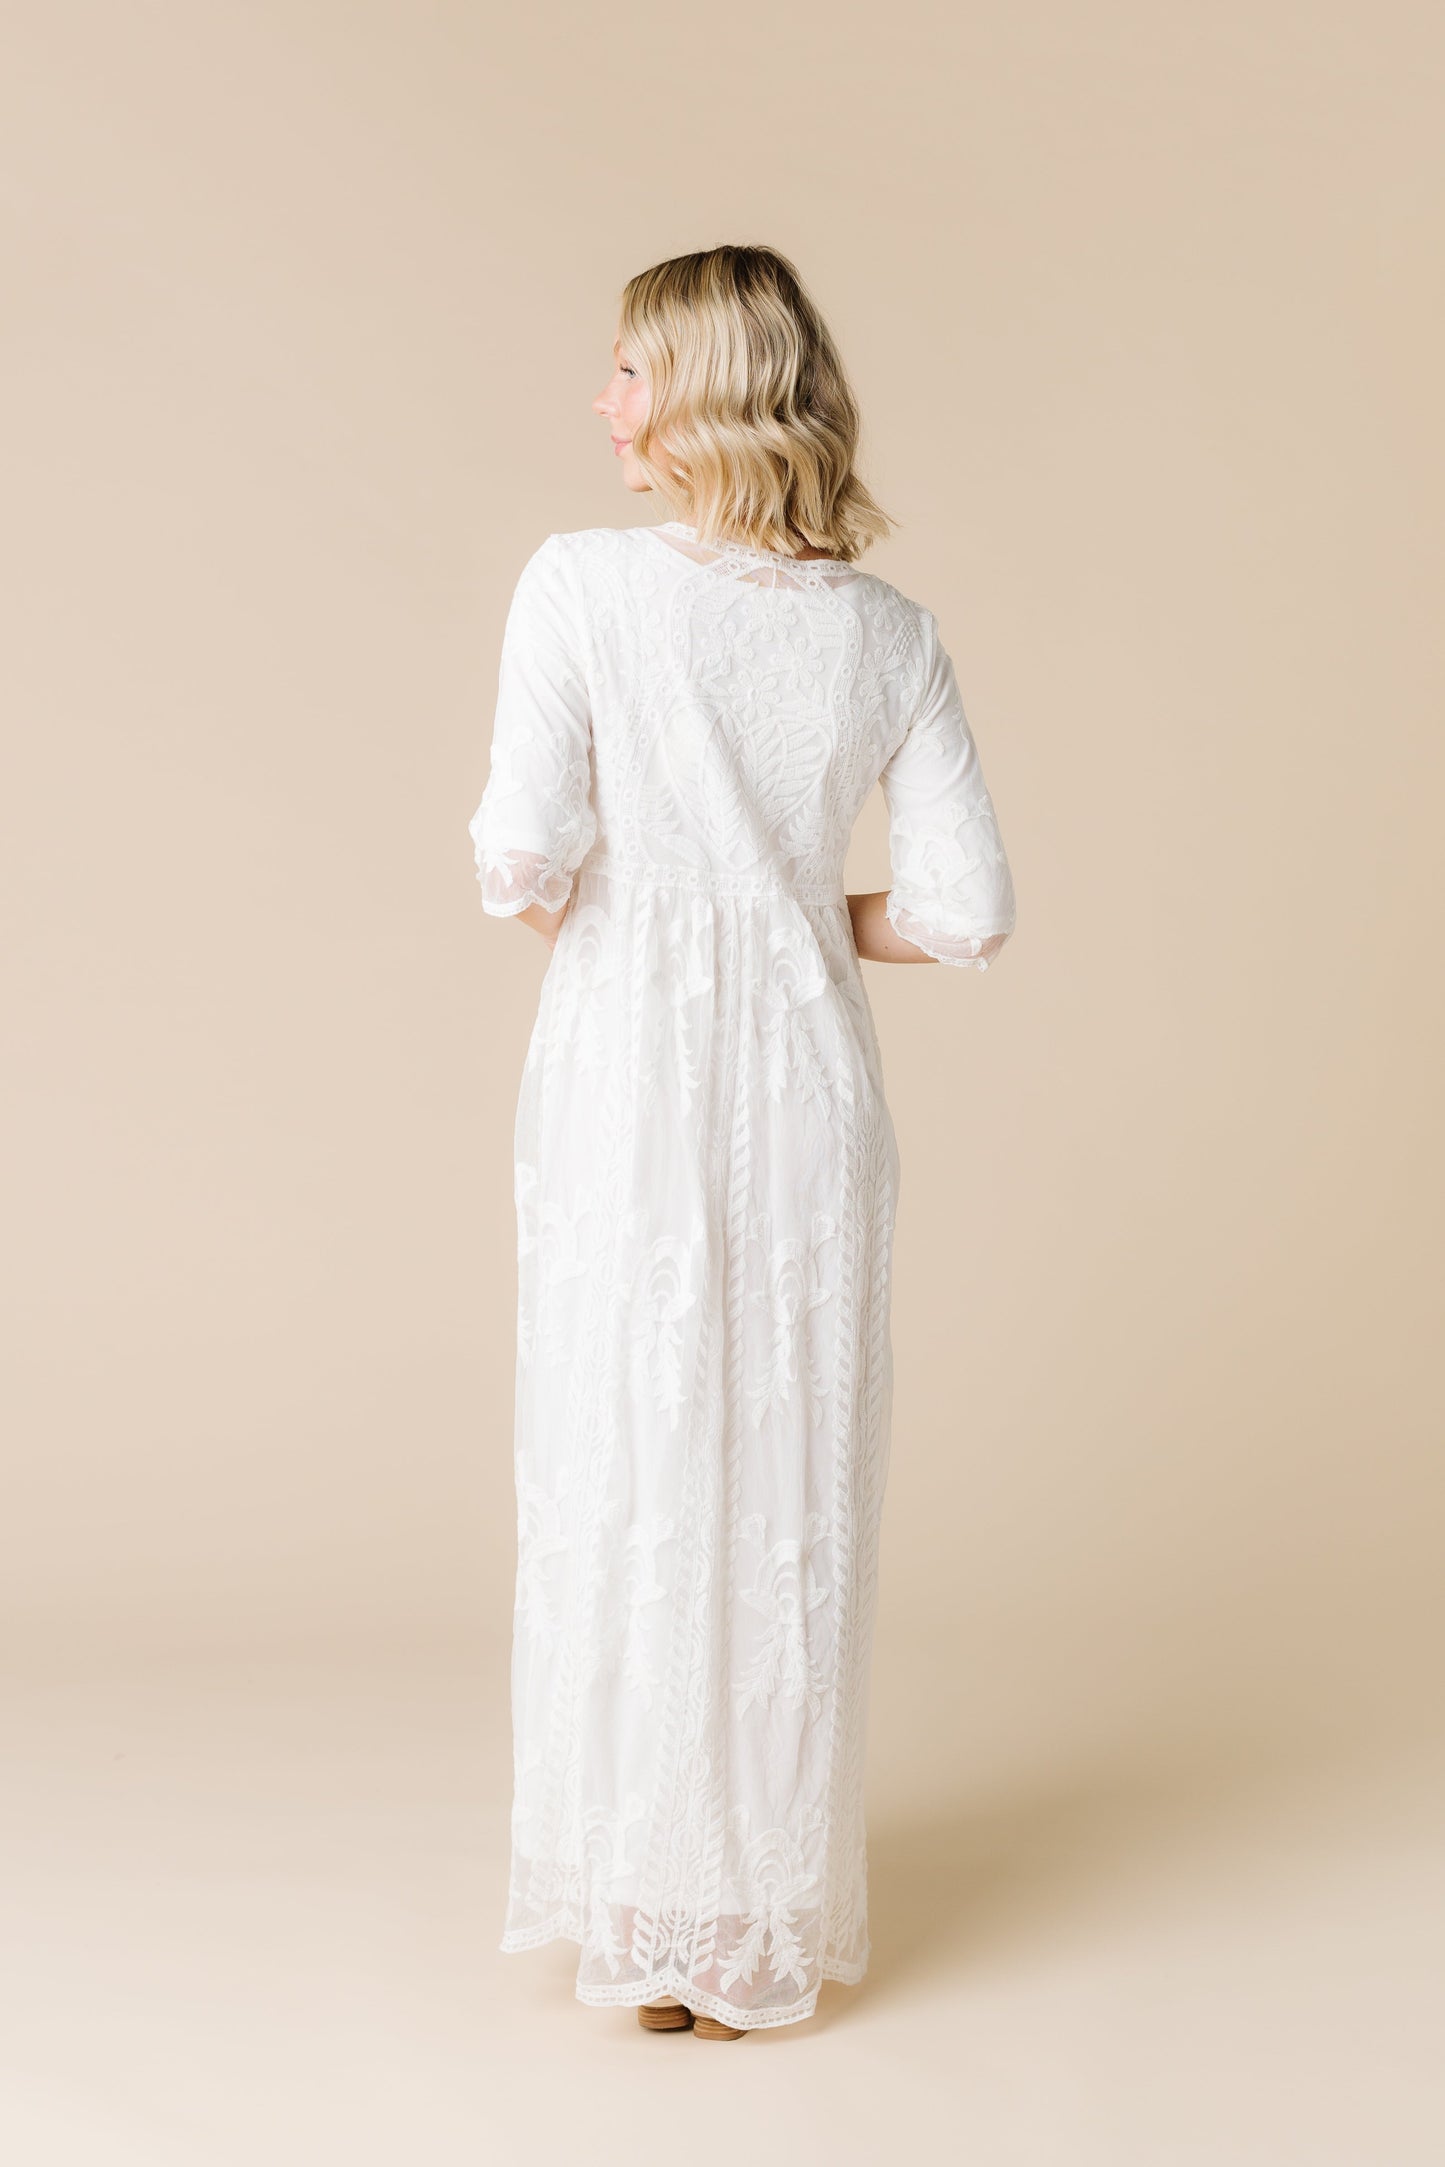 Dressy White Lace Maxi WOMEN'S DRESS Tea N Rose 